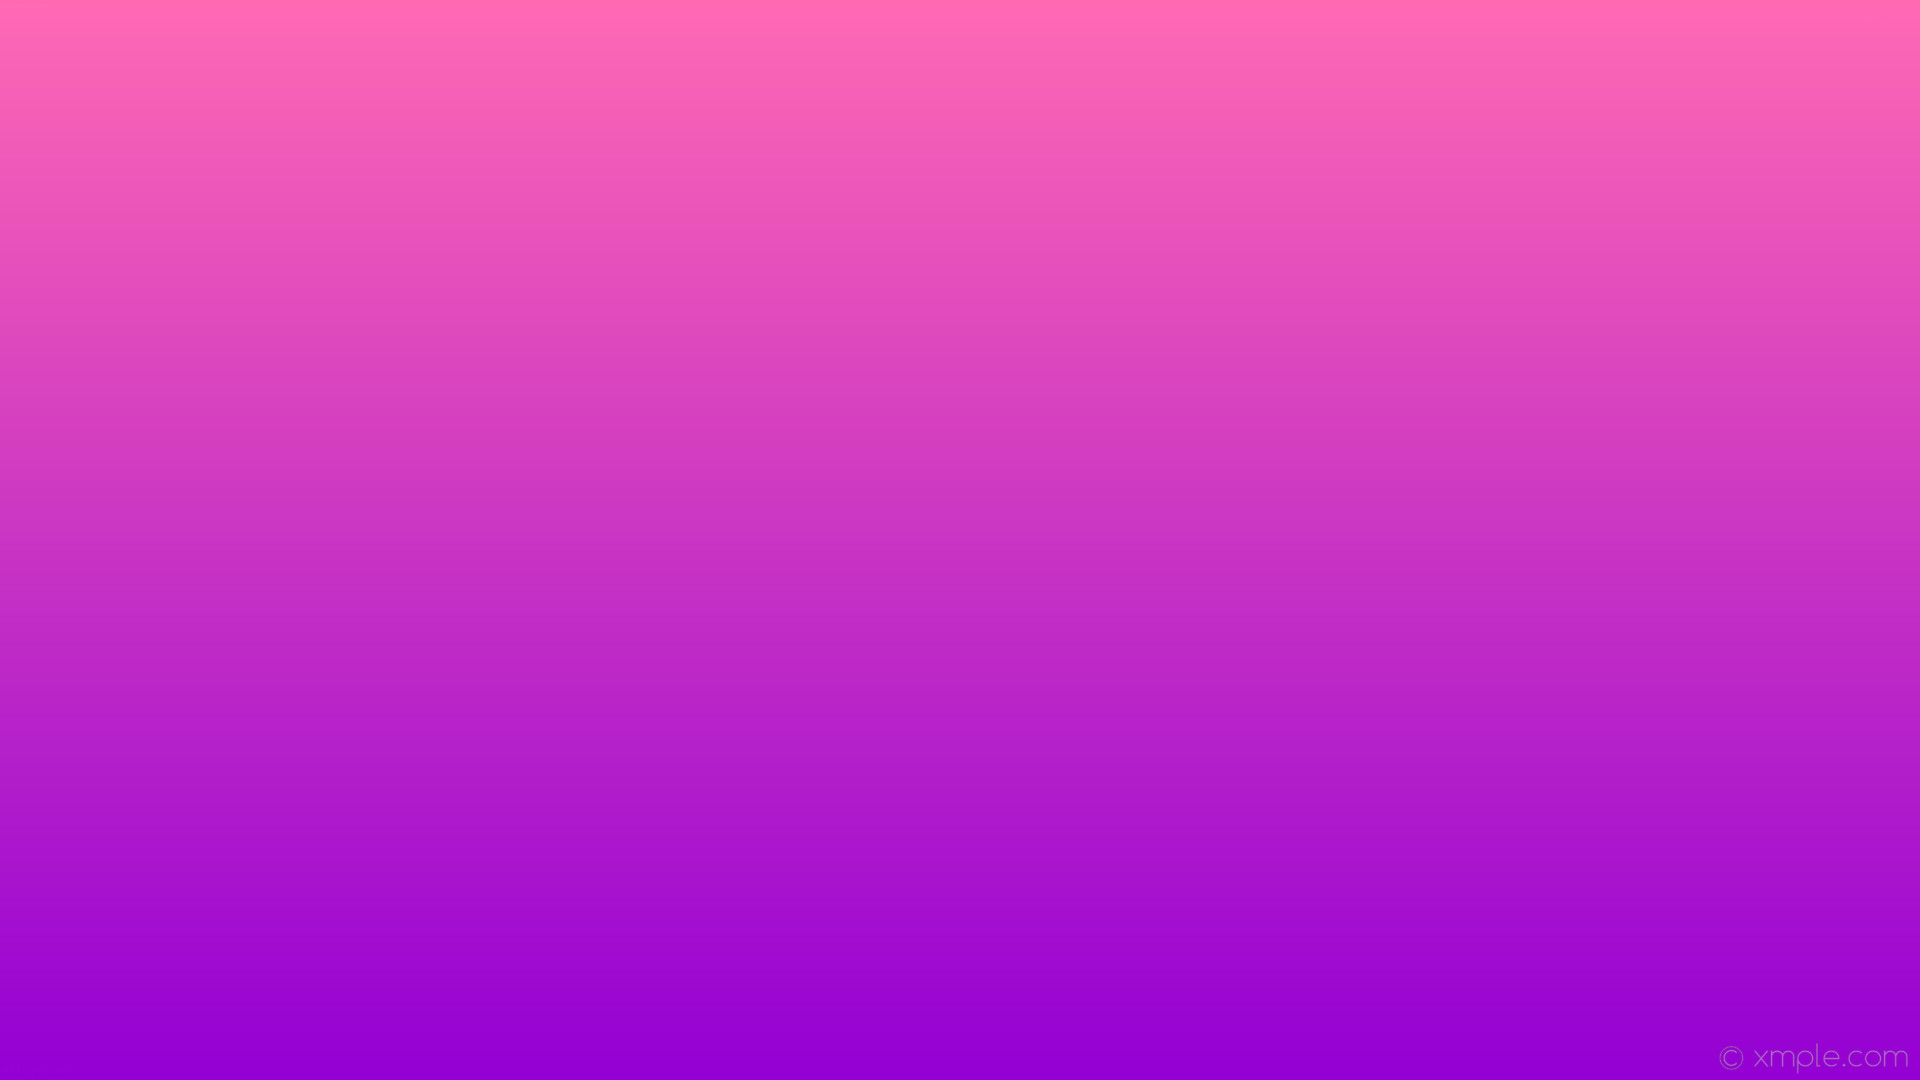 1920x1080 wallpaper pink gradient purple linear hot pink dark violet #ff69b4 #9400d3  90Â°